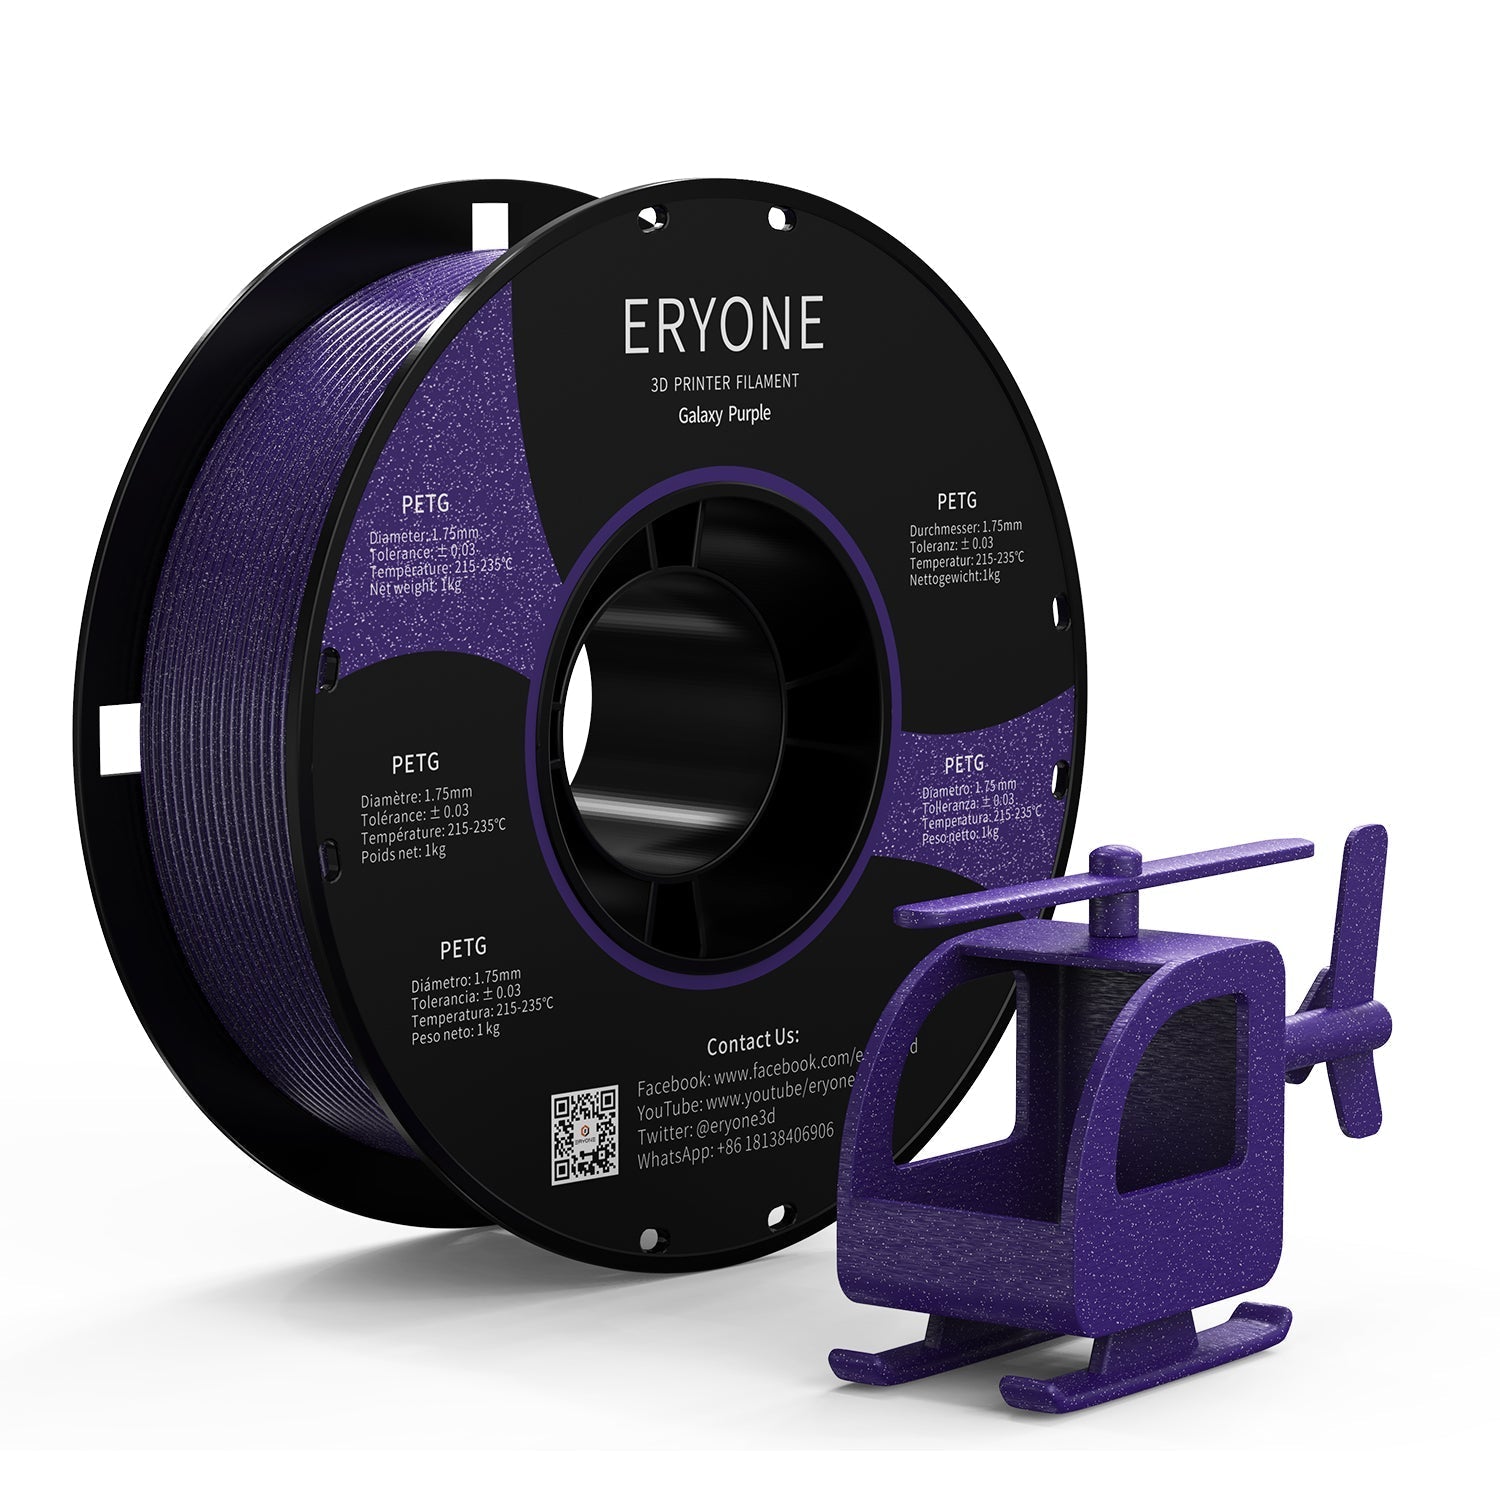 ERYONE Galaxy PETG 3D printer filament 1.75mm, dimensional accuracy +/- 0.05mm, 1kg (2.2LBS) / spool 